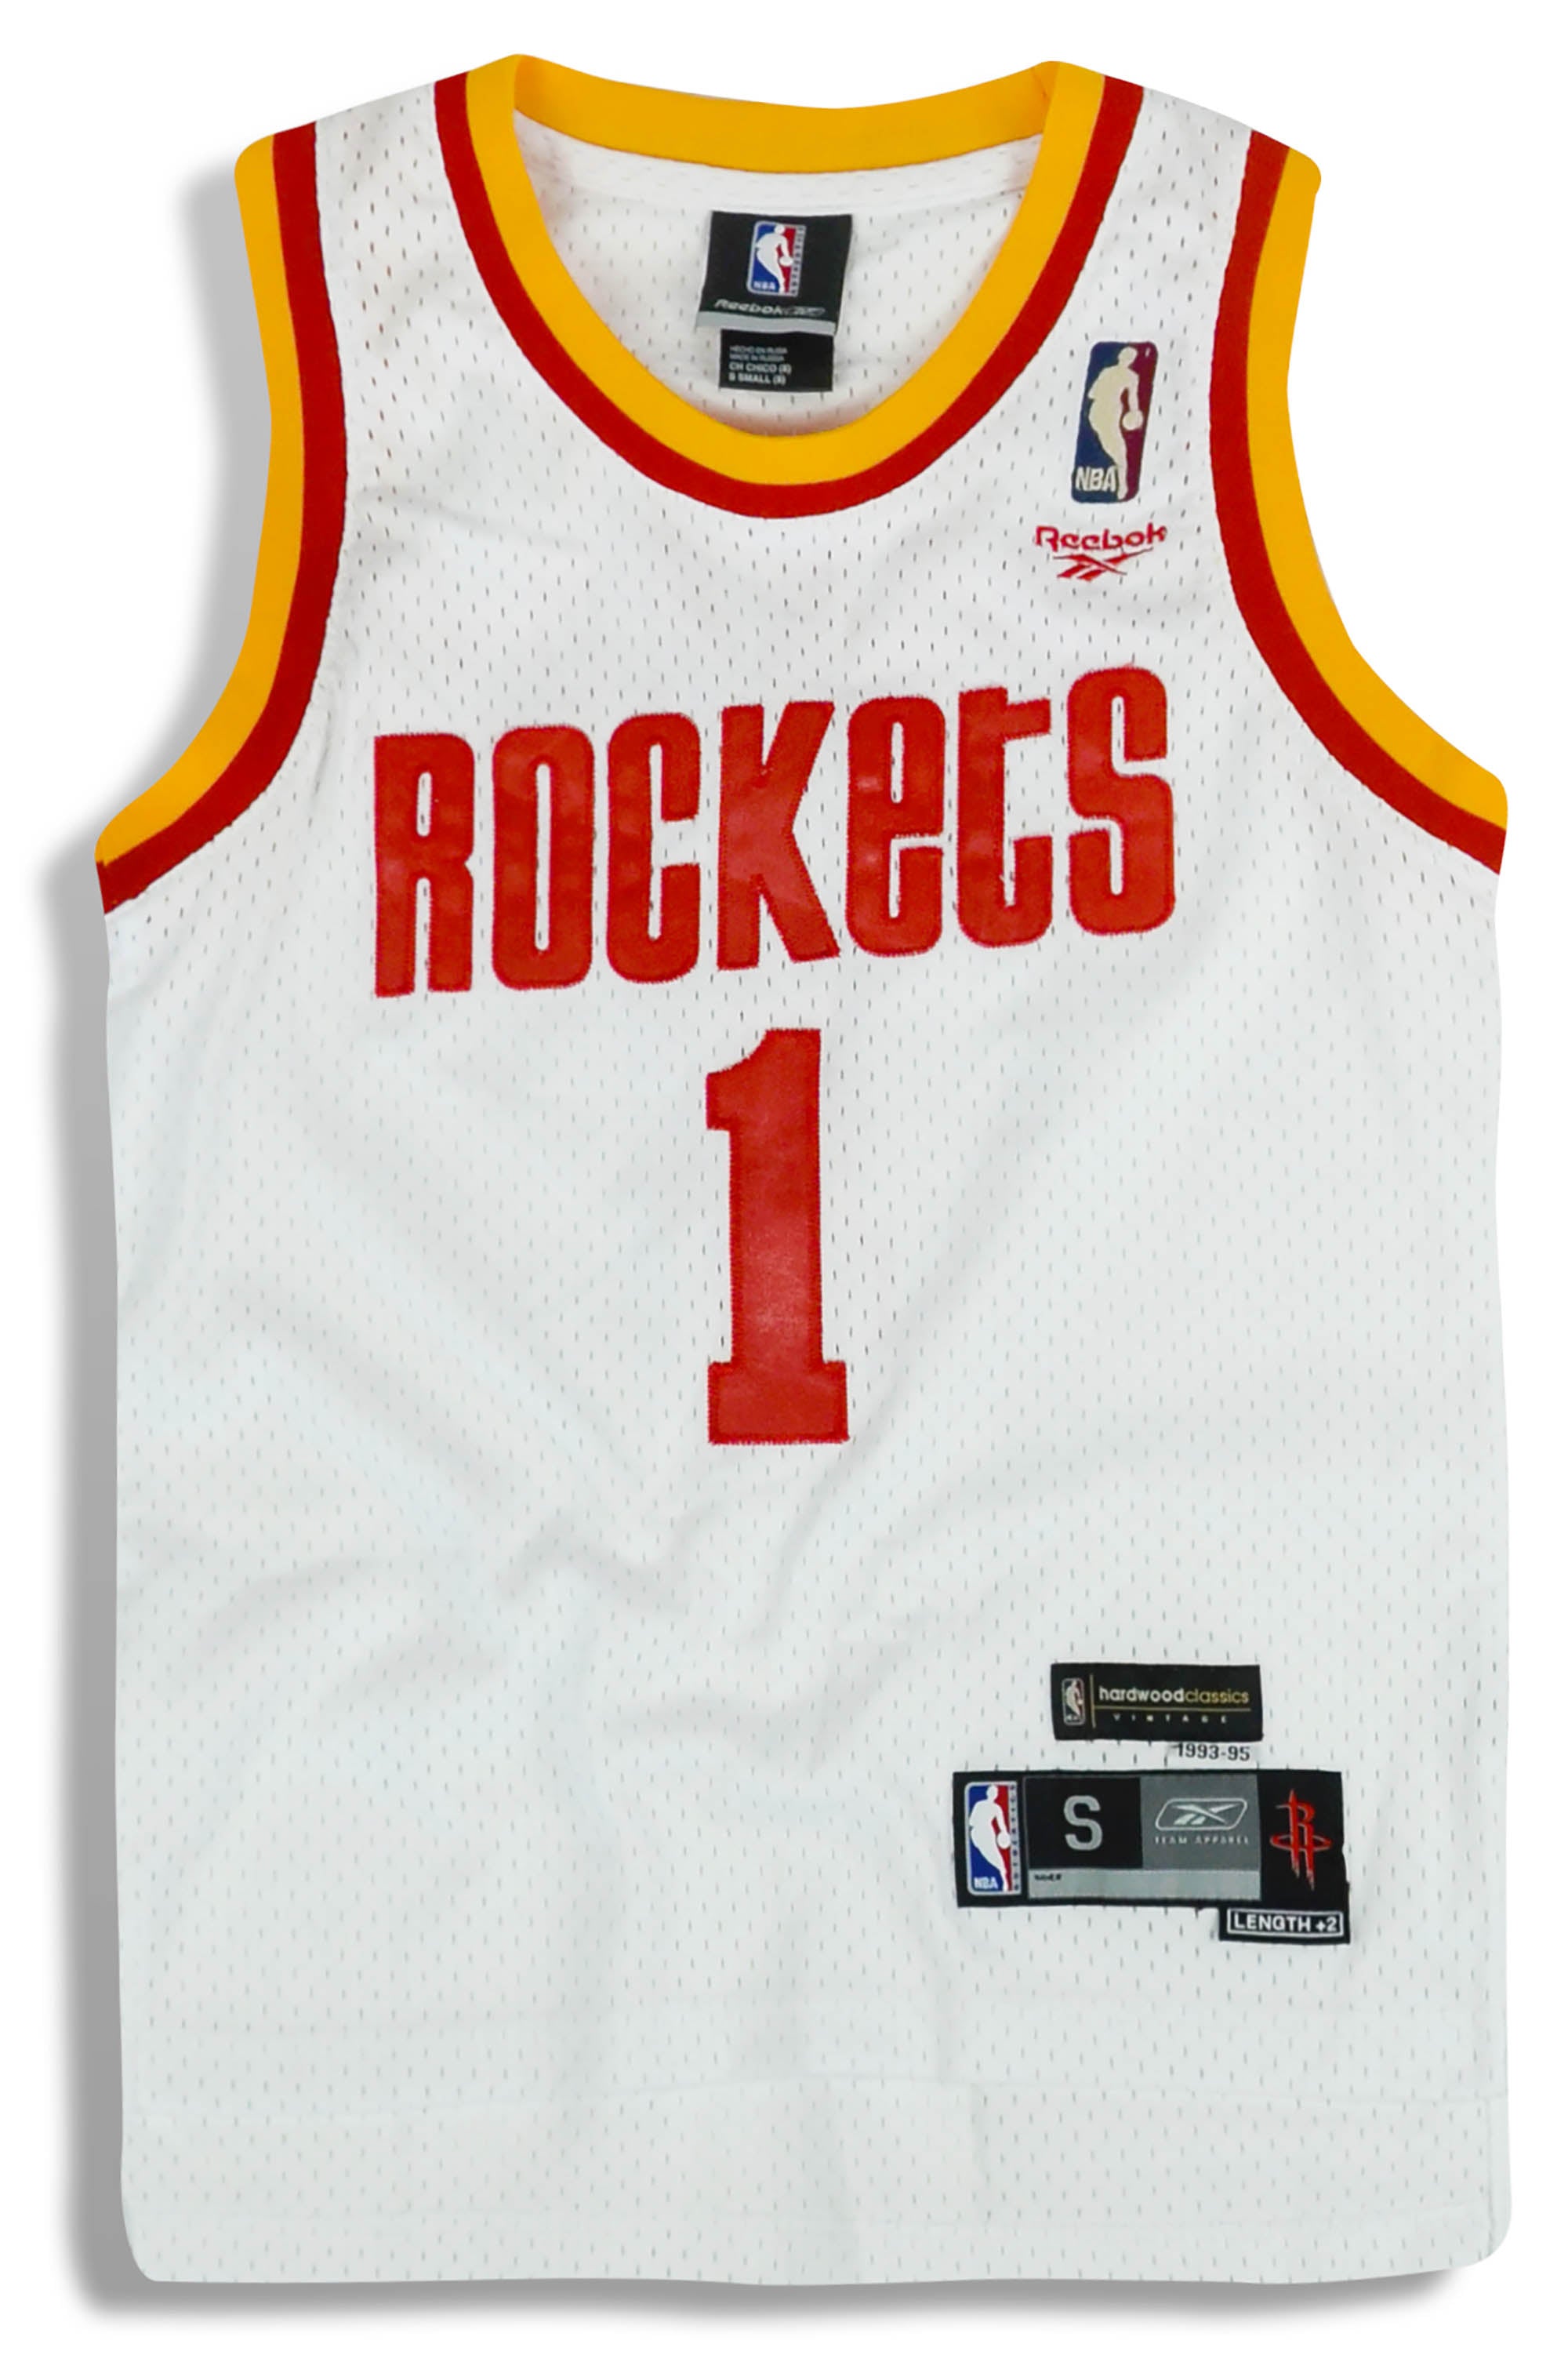 Reebok, Shirts, Tracy Mcgrady Houston Rockets Jersey